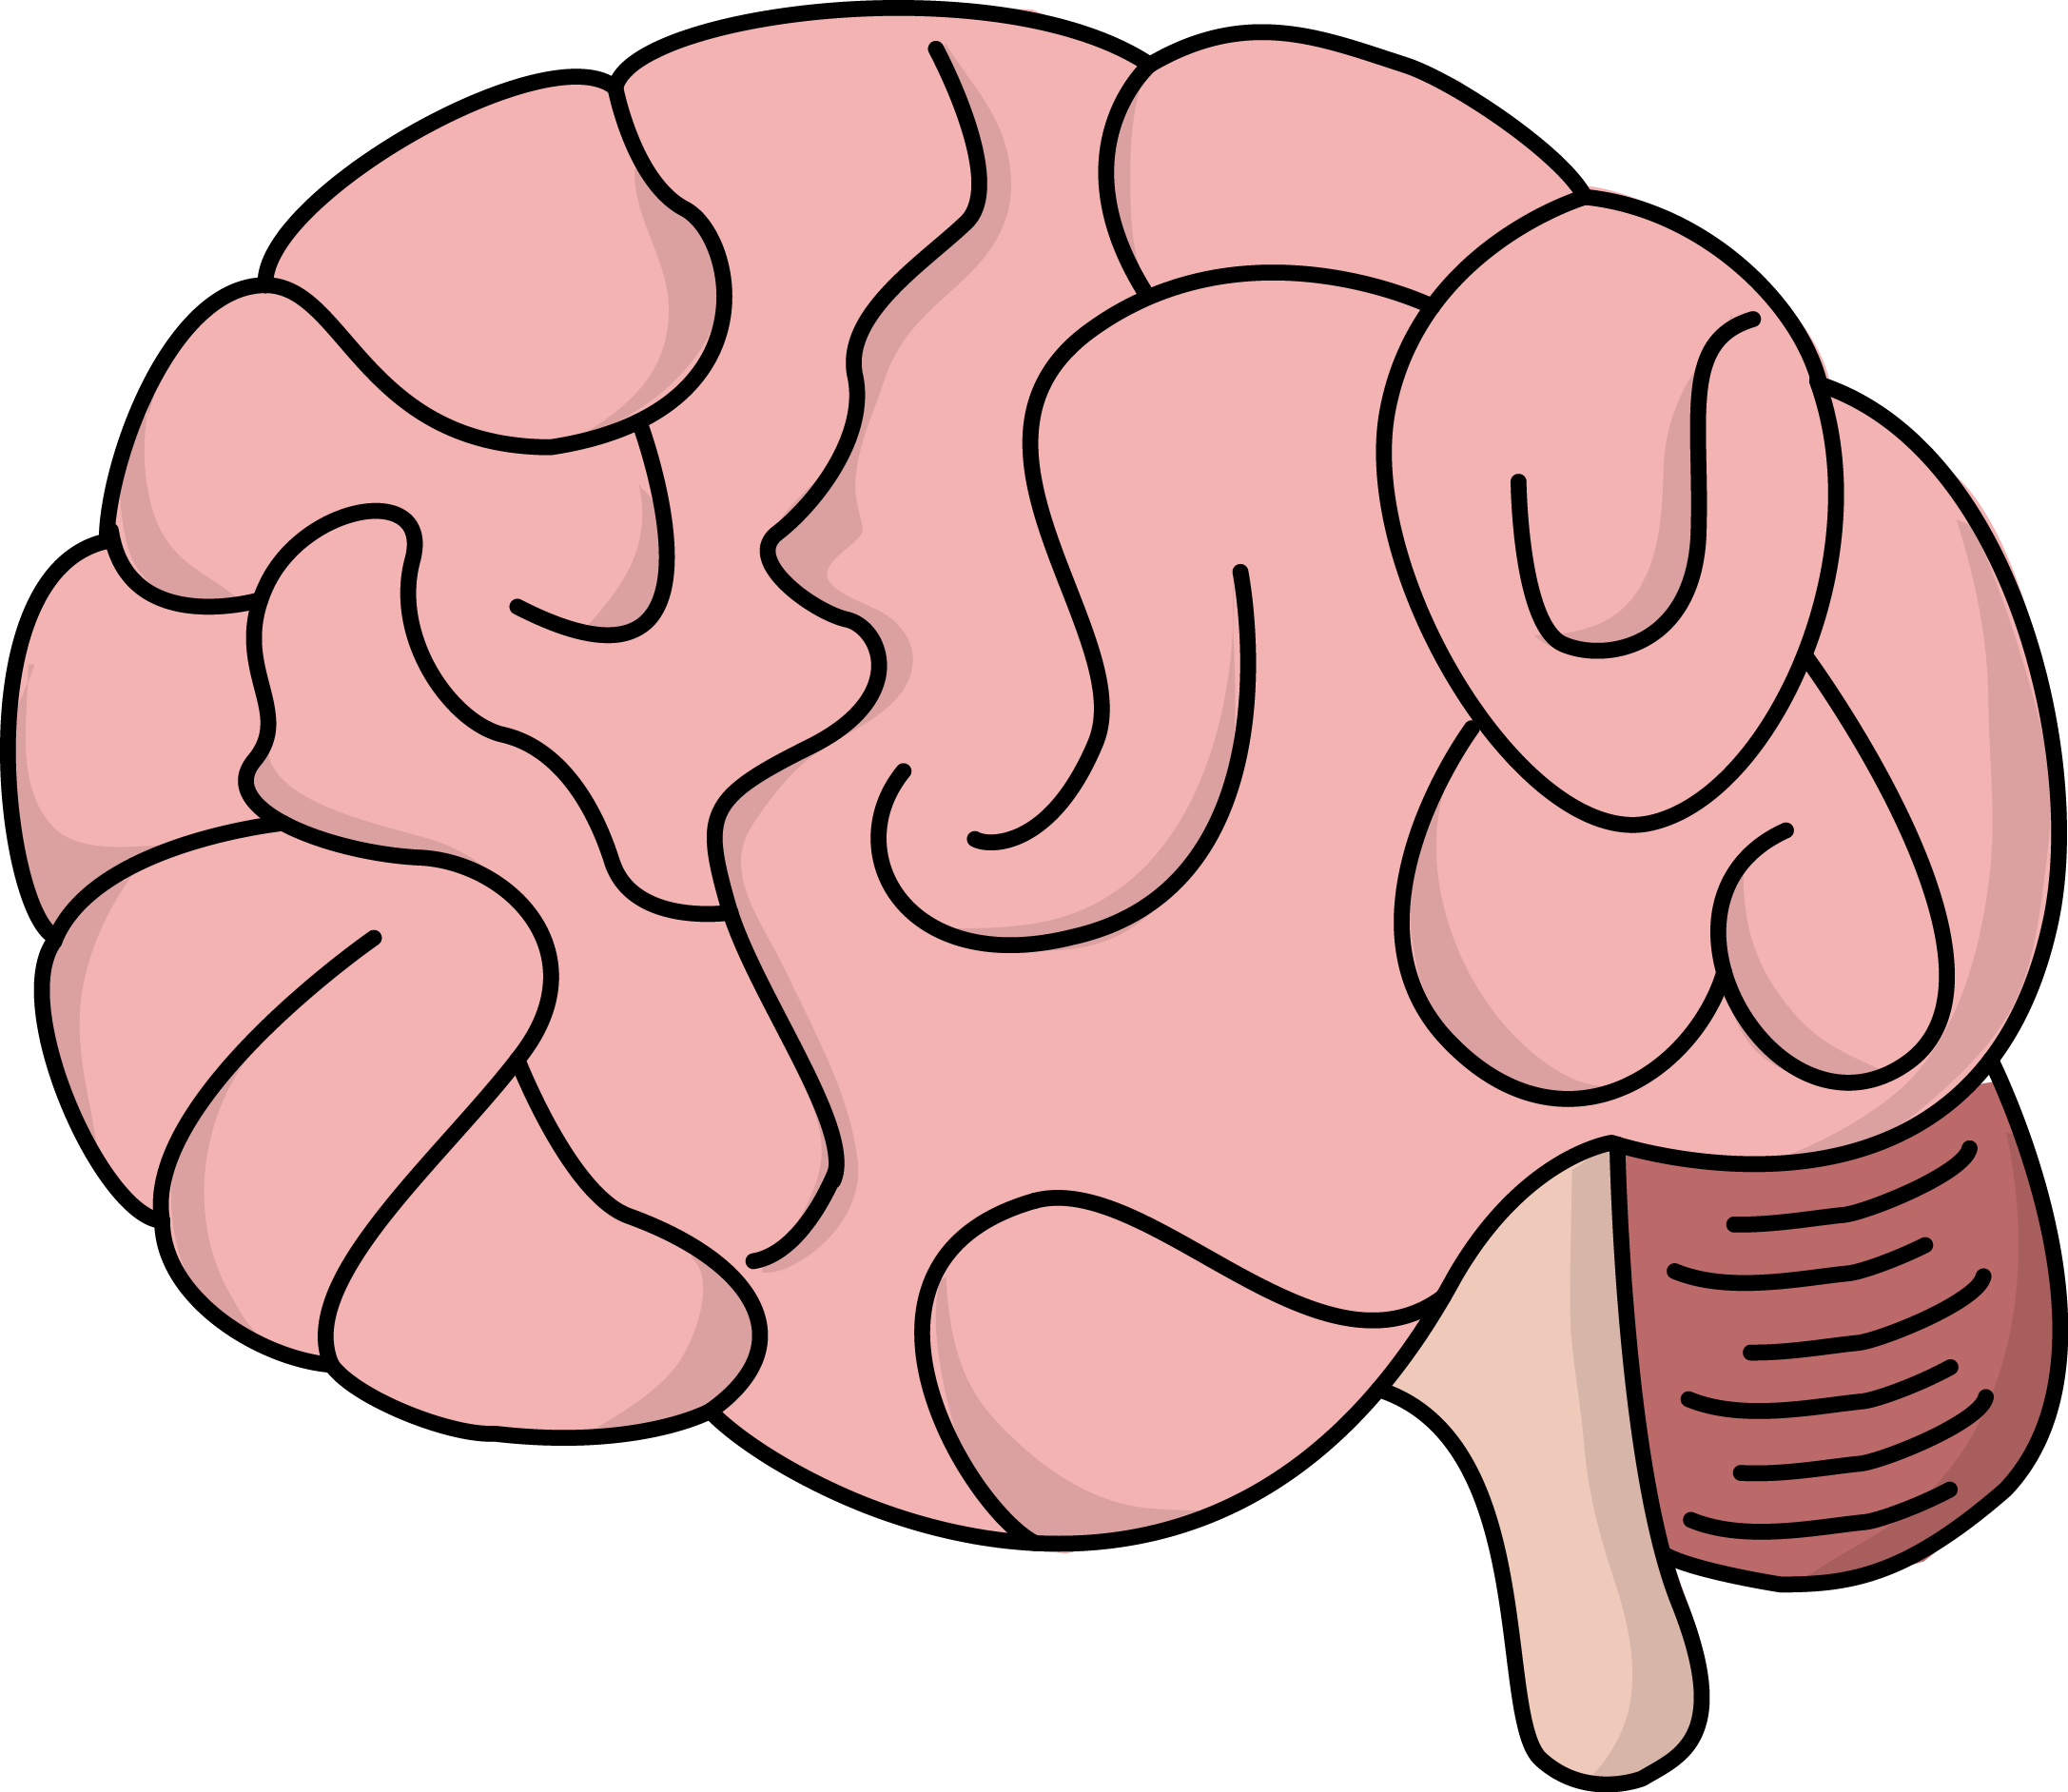 Мозги картинка. Мозг рисунок. Мозг нарисованный. Рисунок мозга для срисовки.